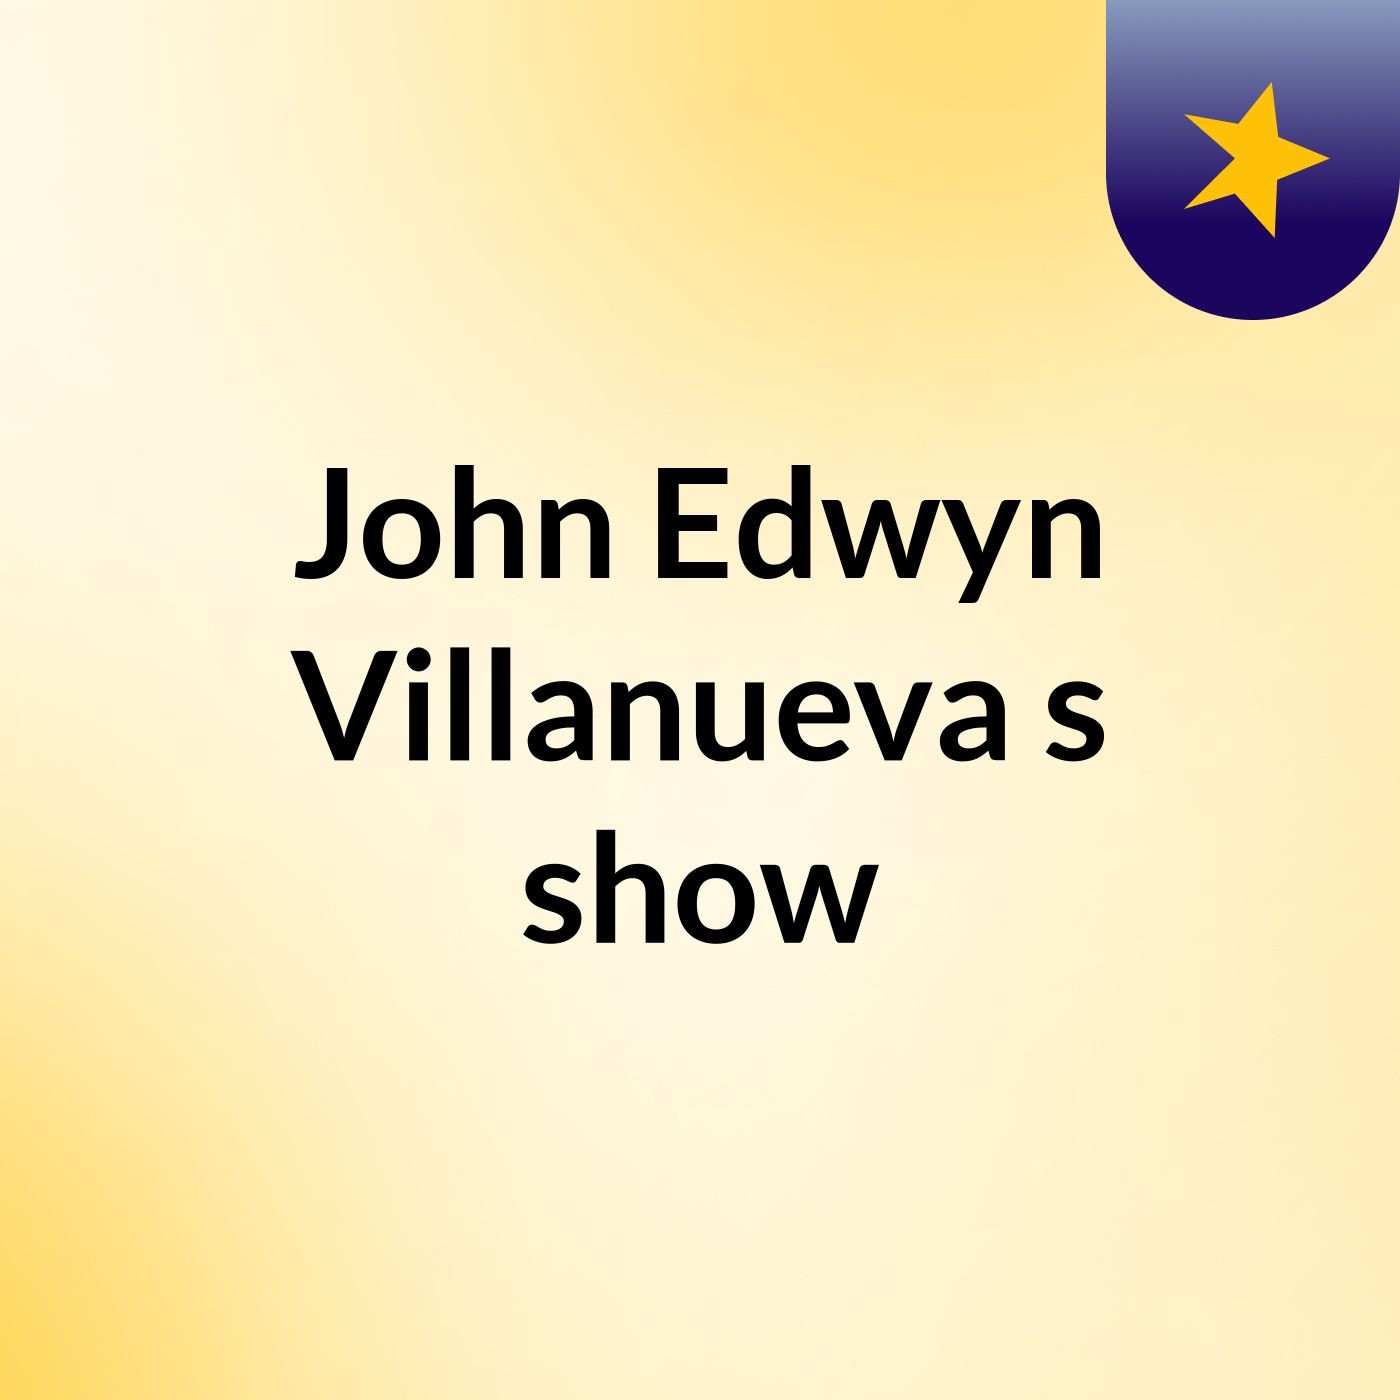 John Edwyn Villanueva's show